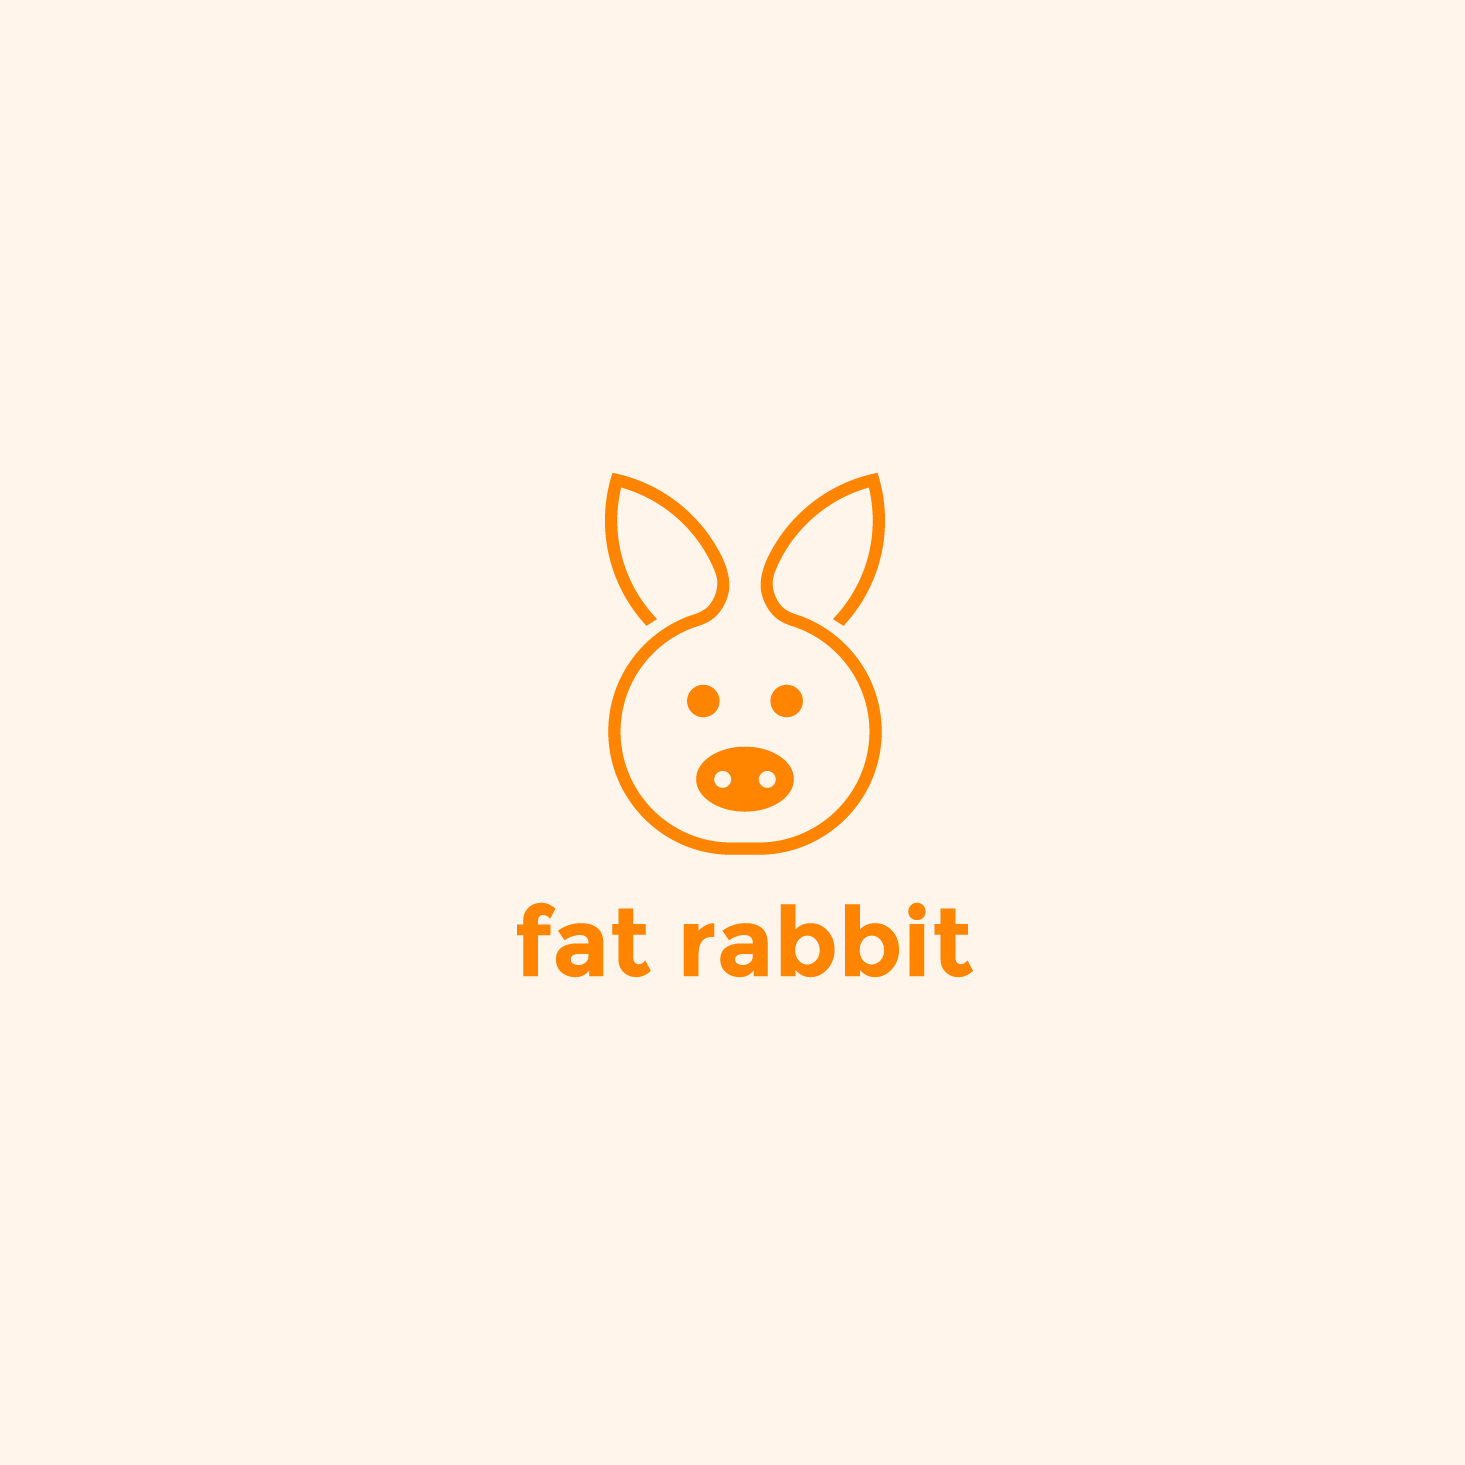 Logo with rabbit